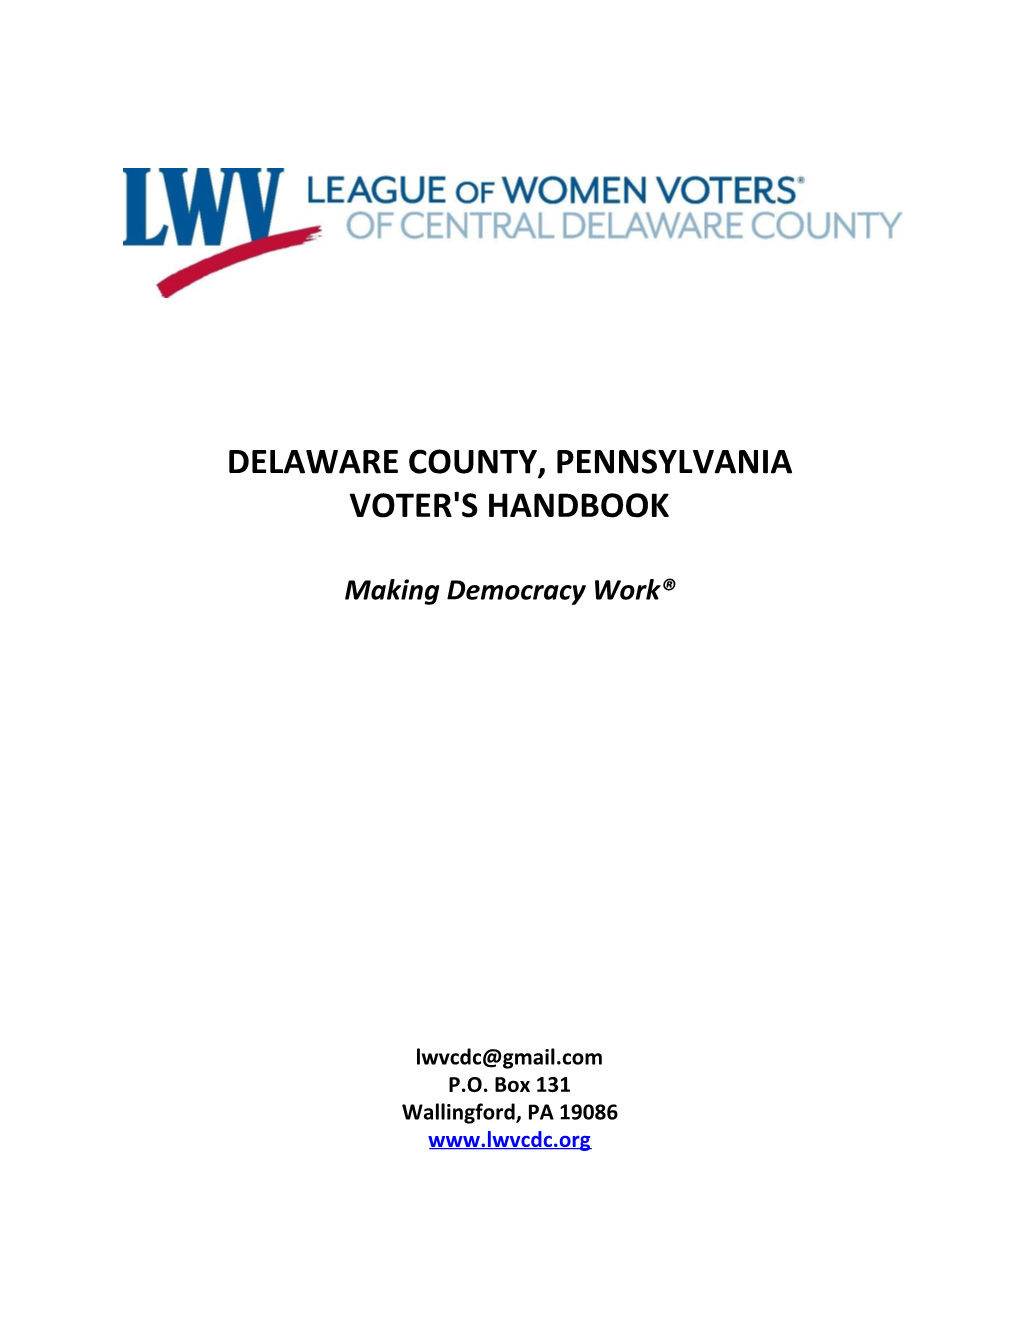 Delaware County, Pennsylvania Voter's Handbook